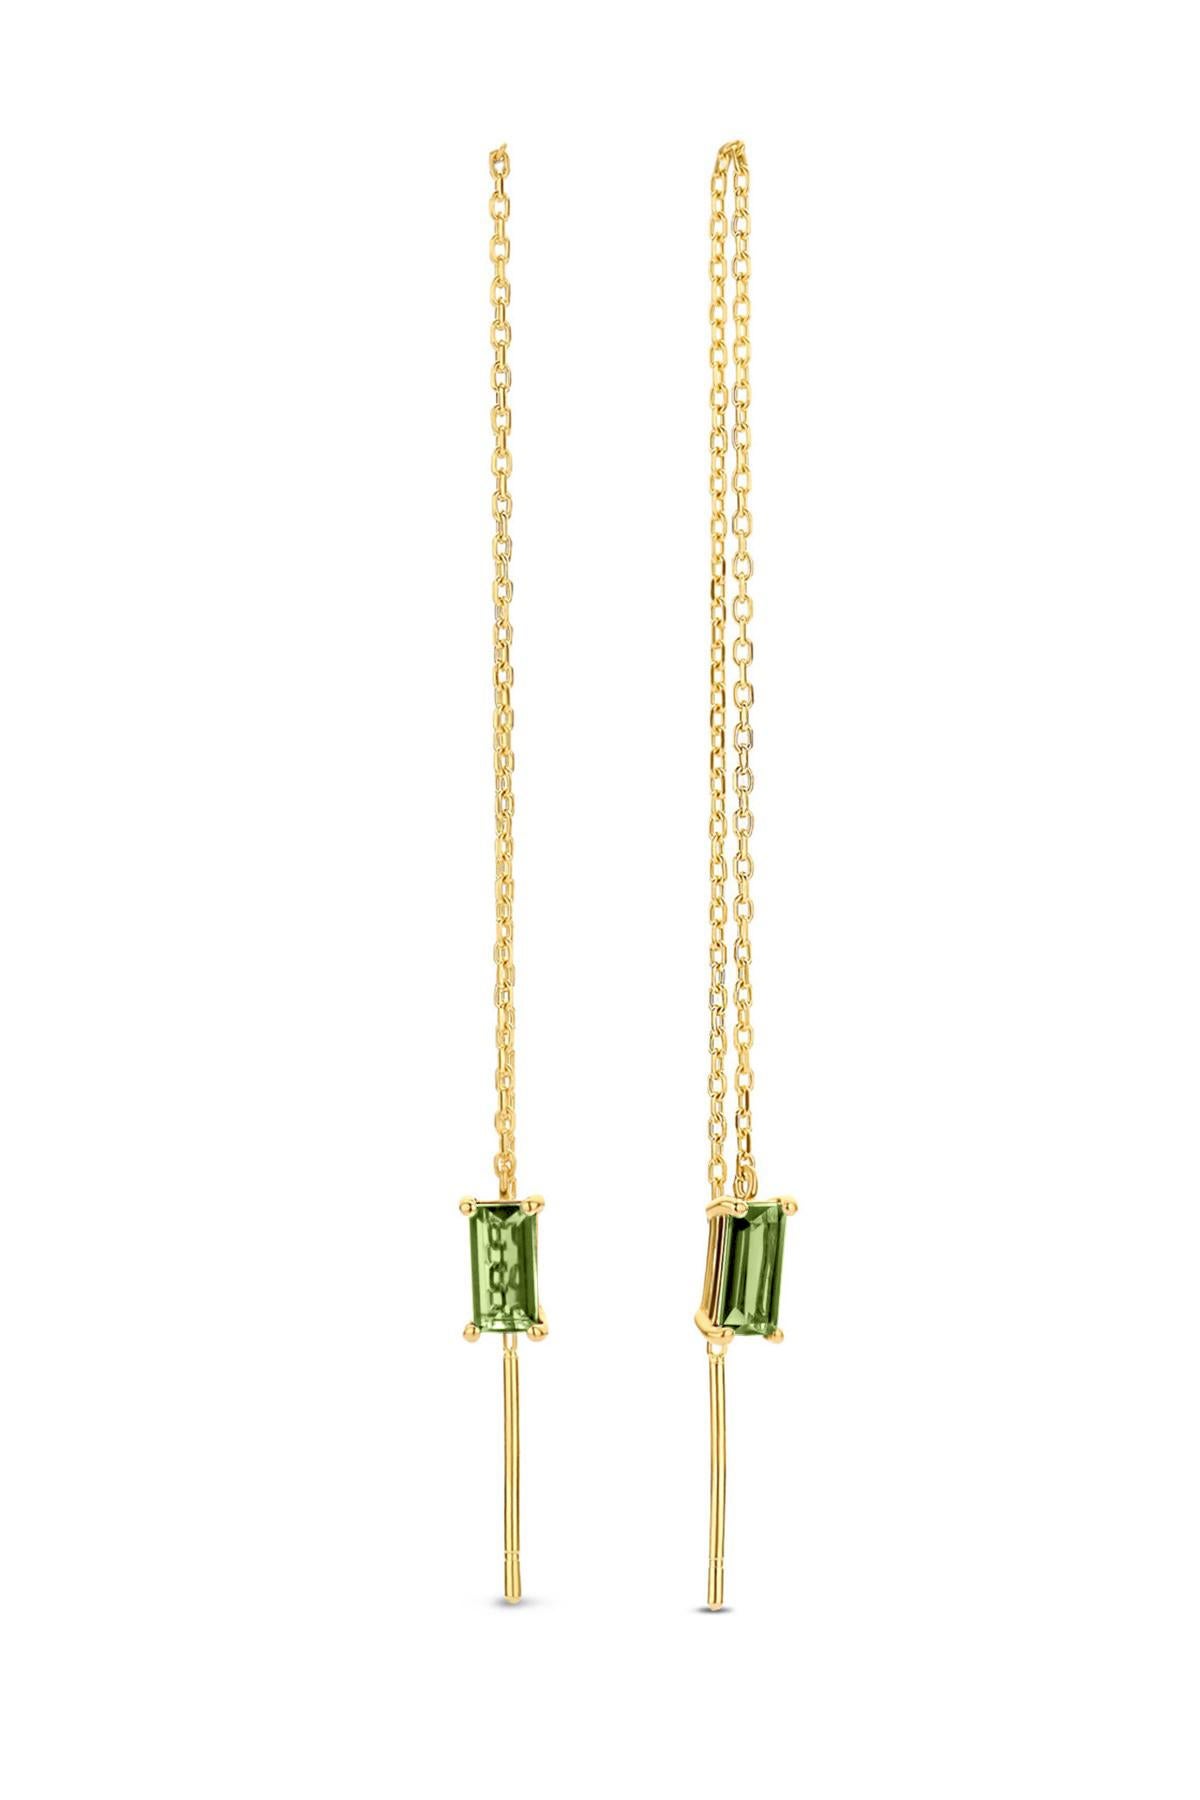 Modern 14k Solid Gold Drop Earrings with Peridot, Chain Gold Earrings For Sale